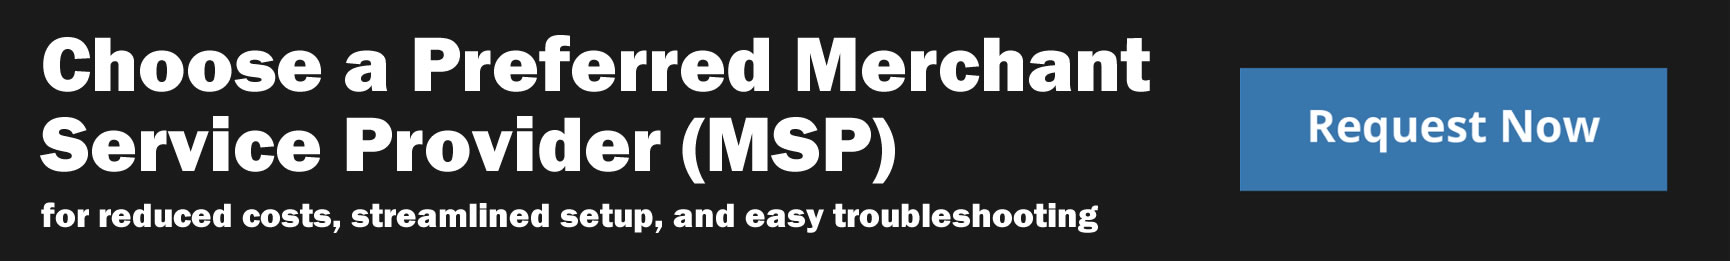 Choose a Preferred MSP